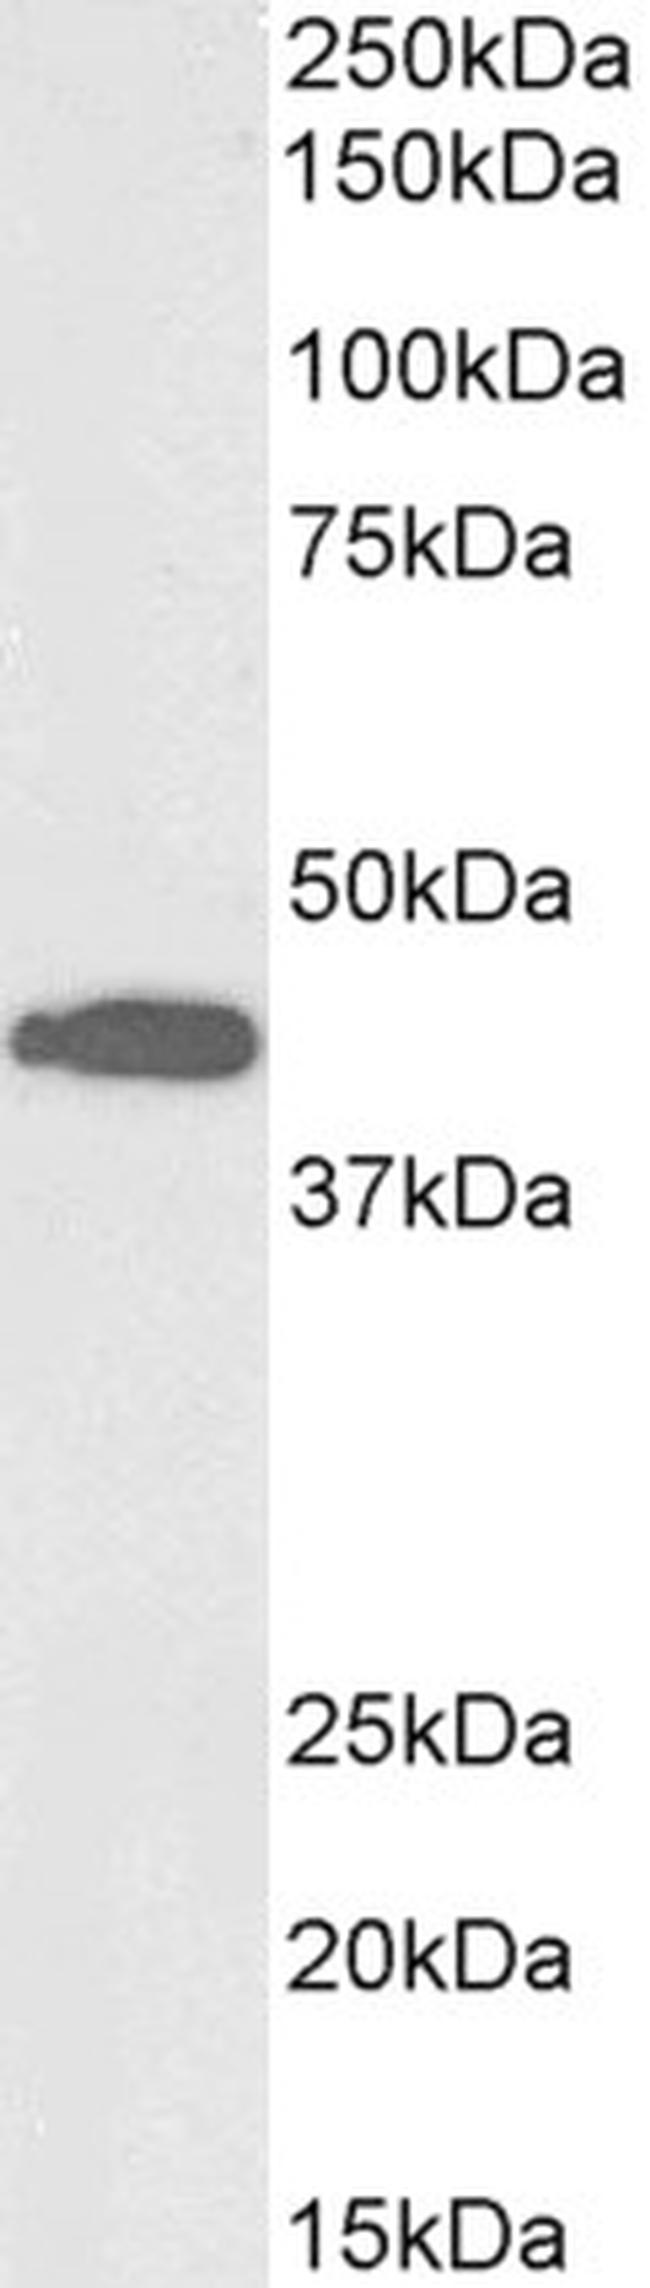 ACAT1 Antibody in Western Blot (WB)